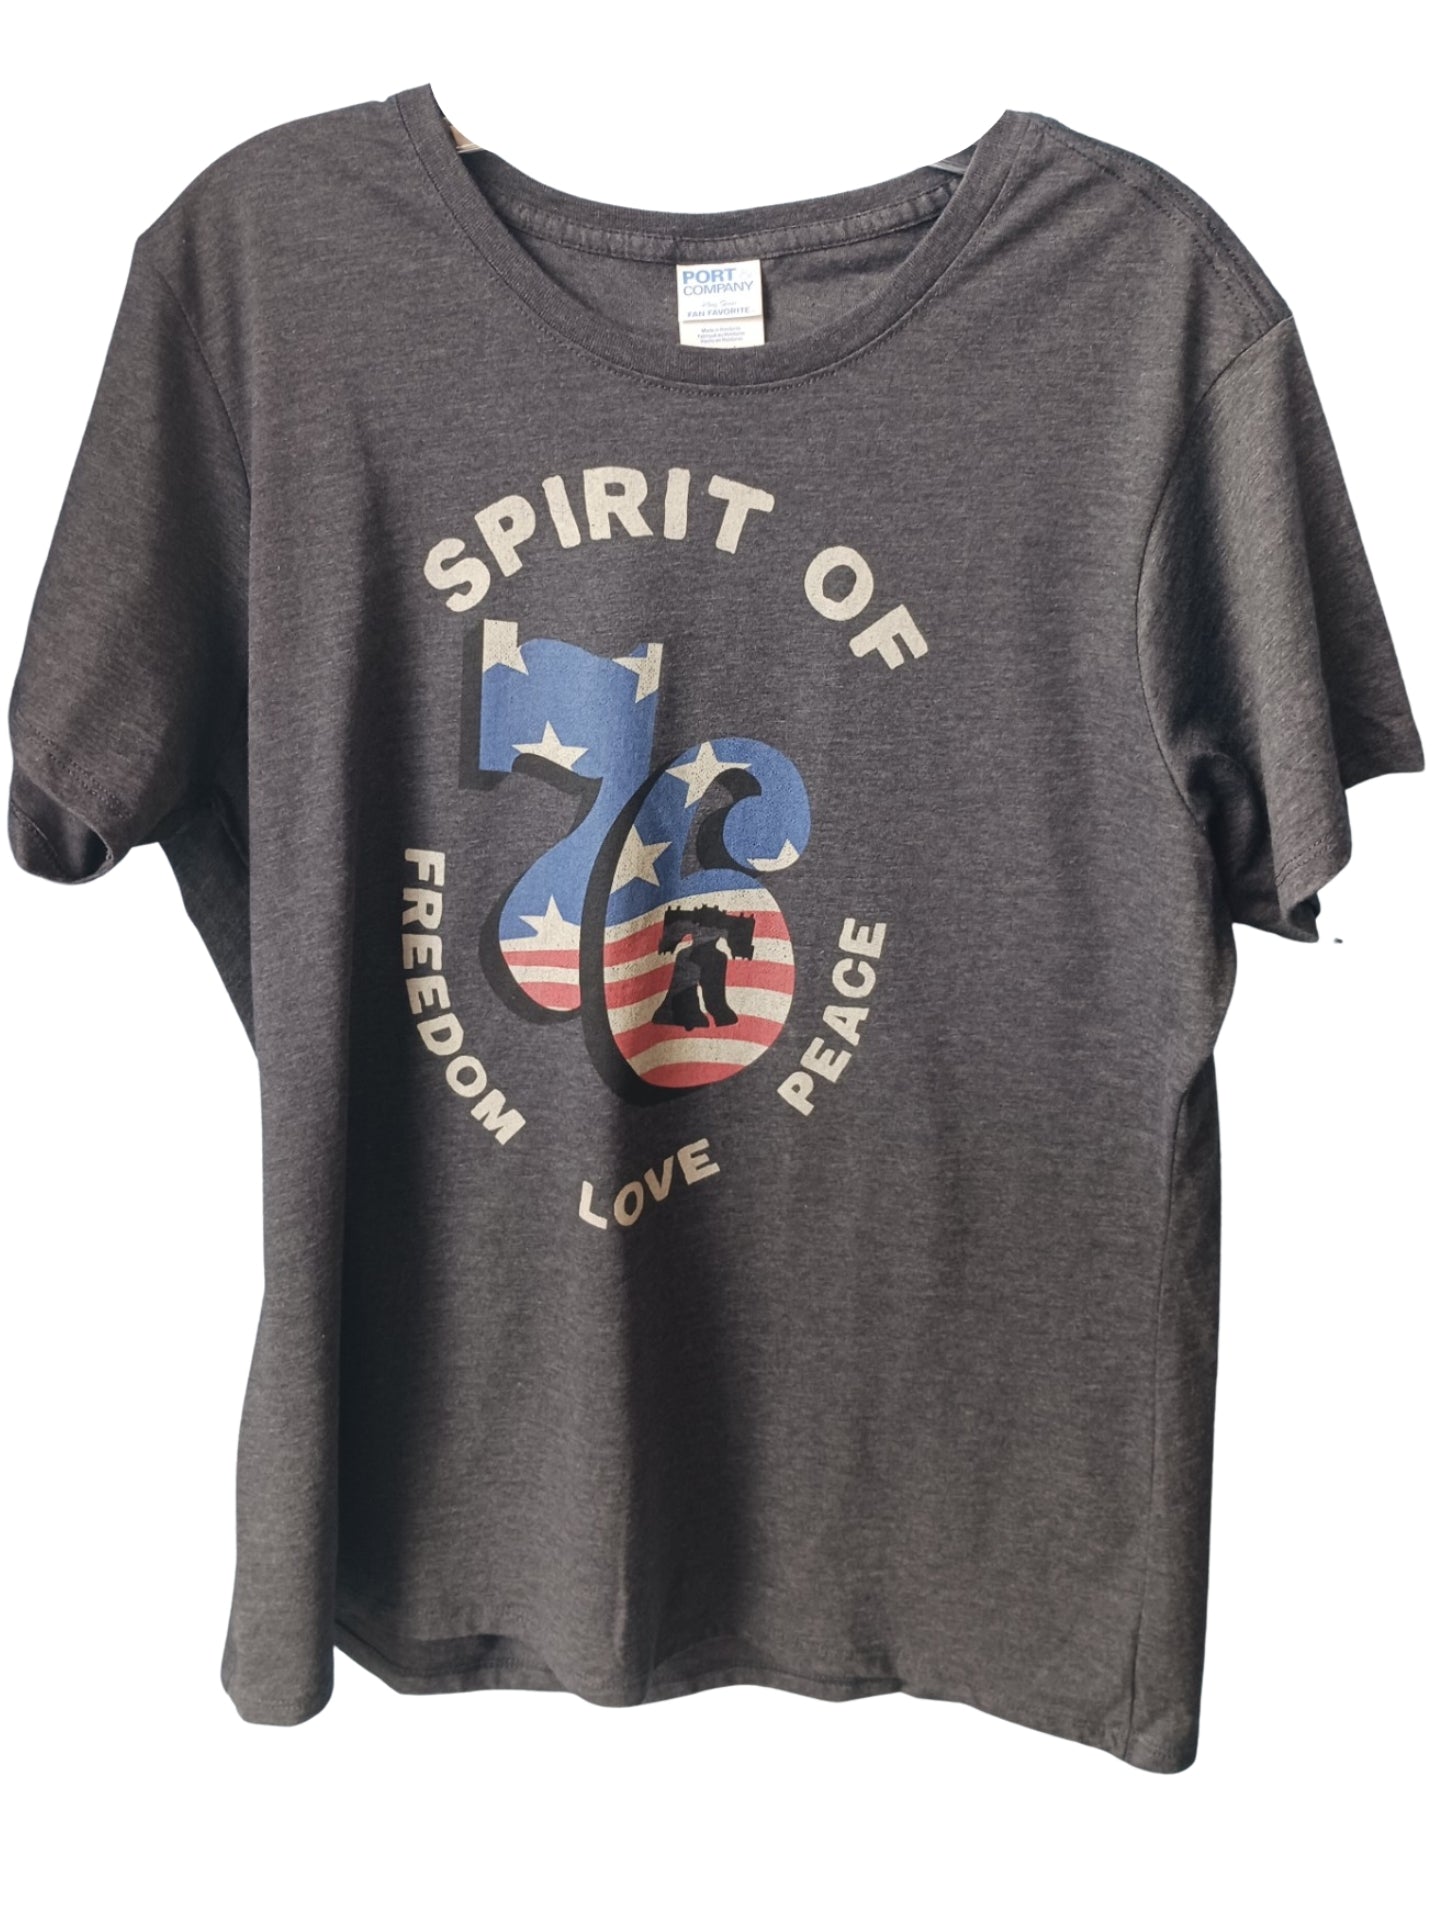 Spirit of 76 Retro T-Shirt, Size XL